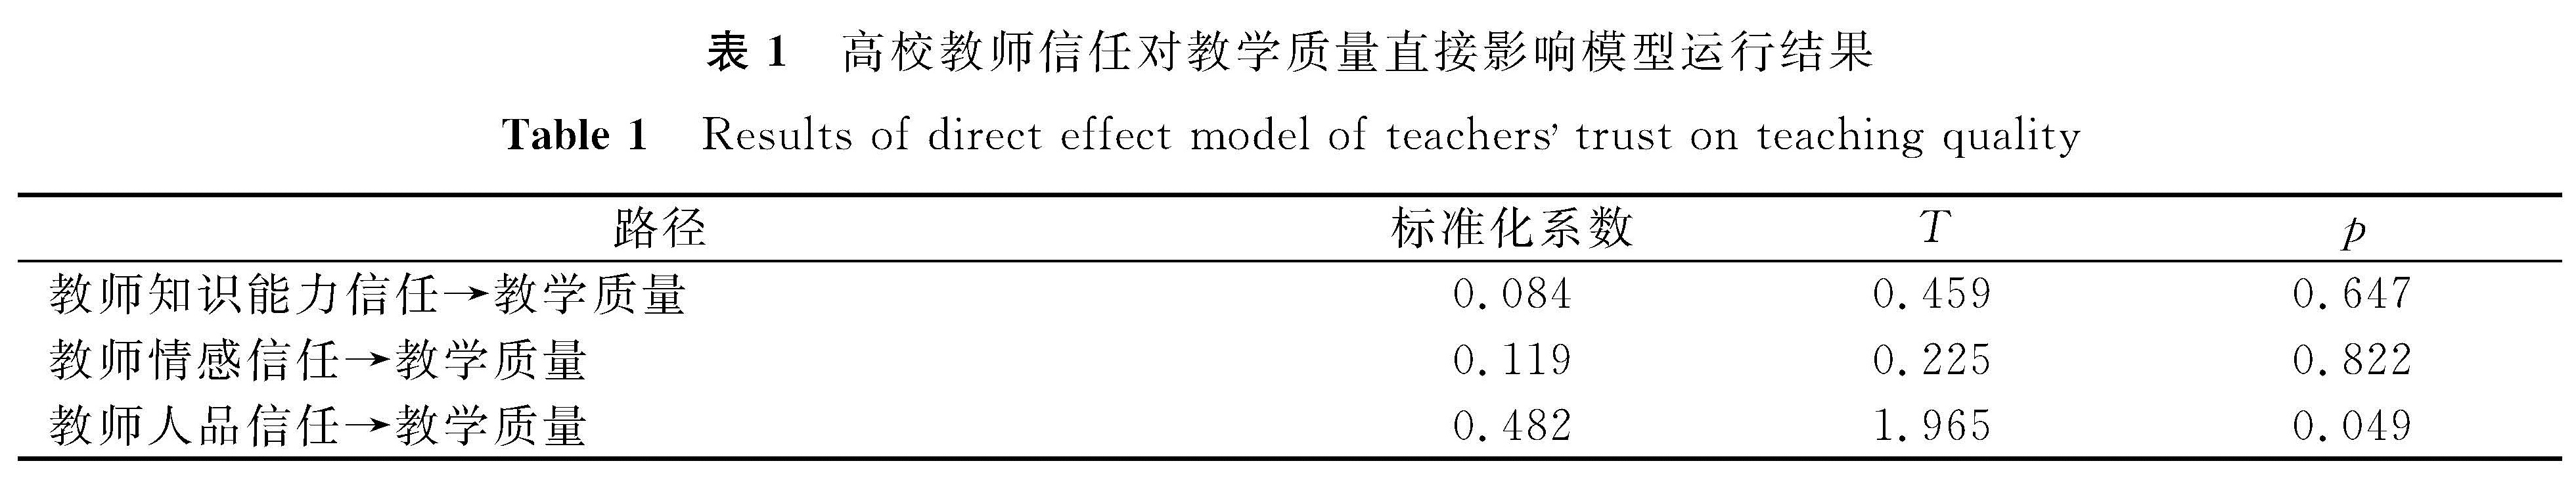 表1 高校教师信任对教学质量直接影响模型运行结果<br/>Table 1 Results of direct effect model of teachers trust on teaching quality